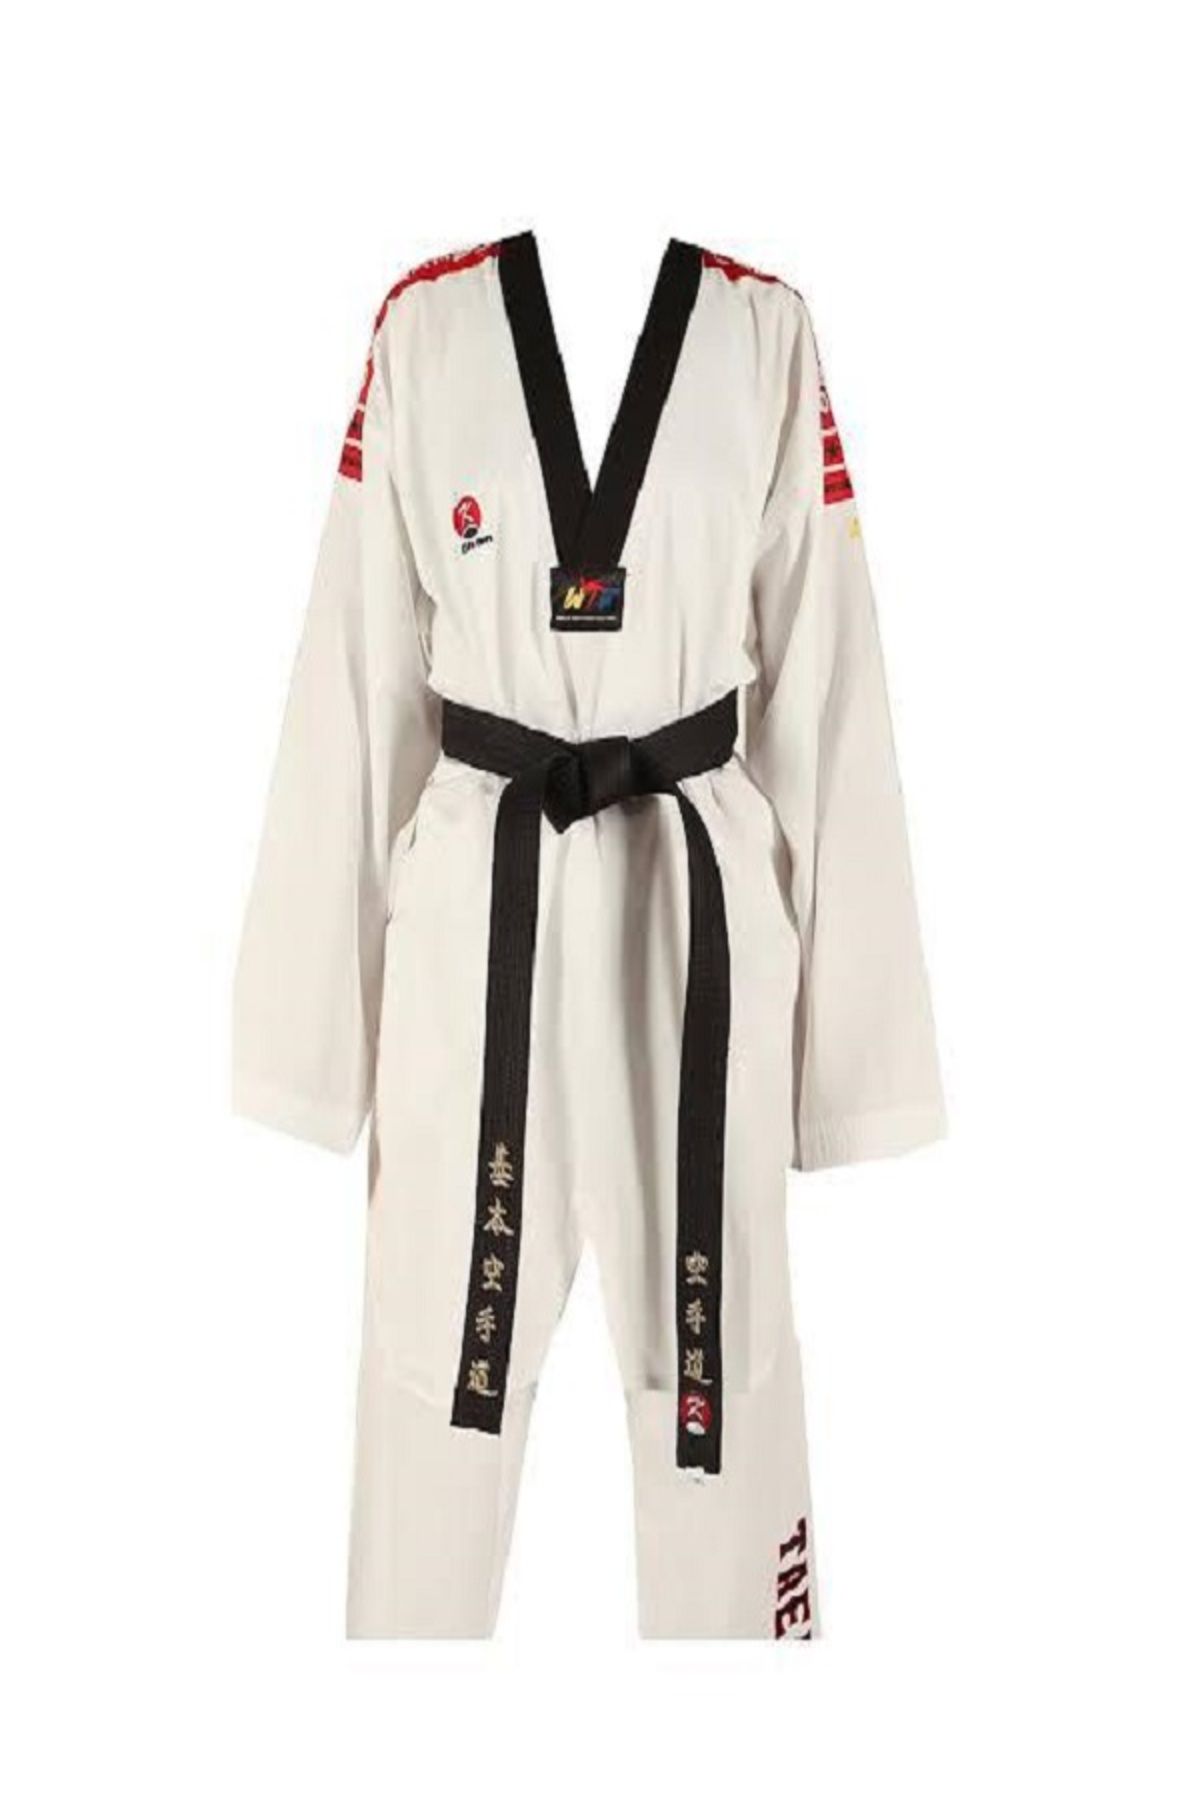 Kihon Siyah Yaka Taekwondo elbisesi